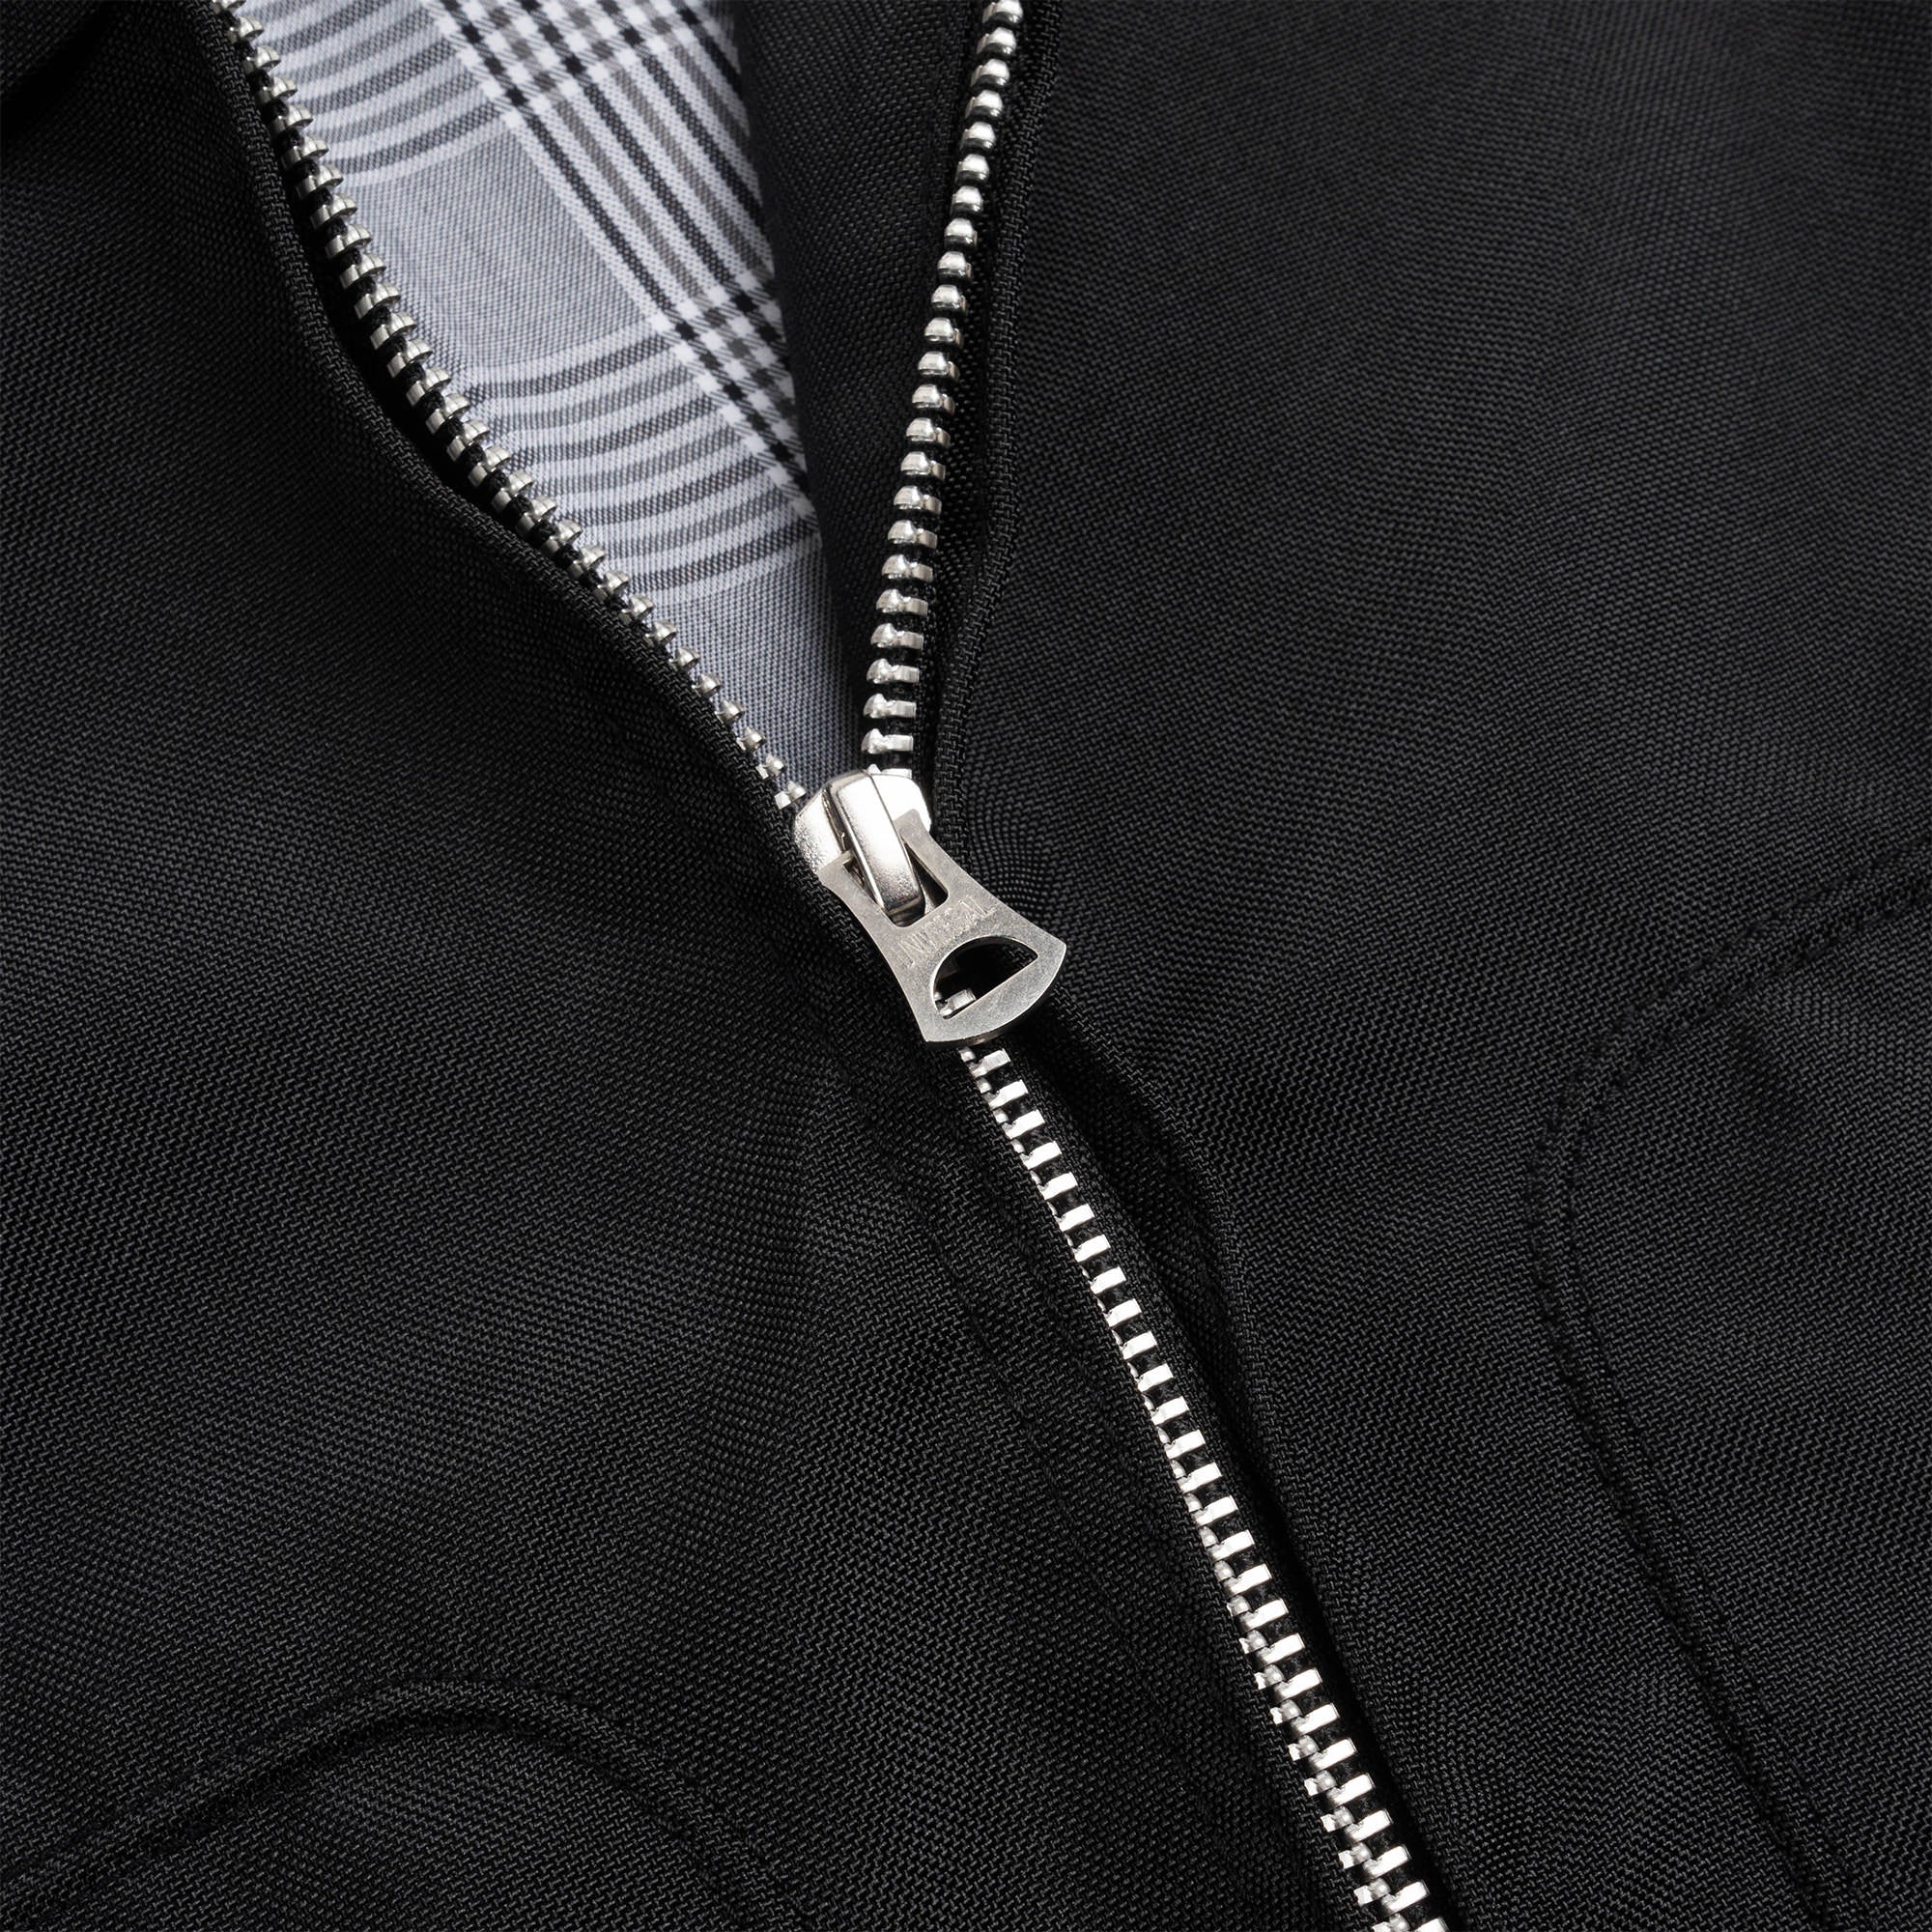 Junya Watanabe MAN Zip-up Shirt Jacket WL-B002-051-1 Black